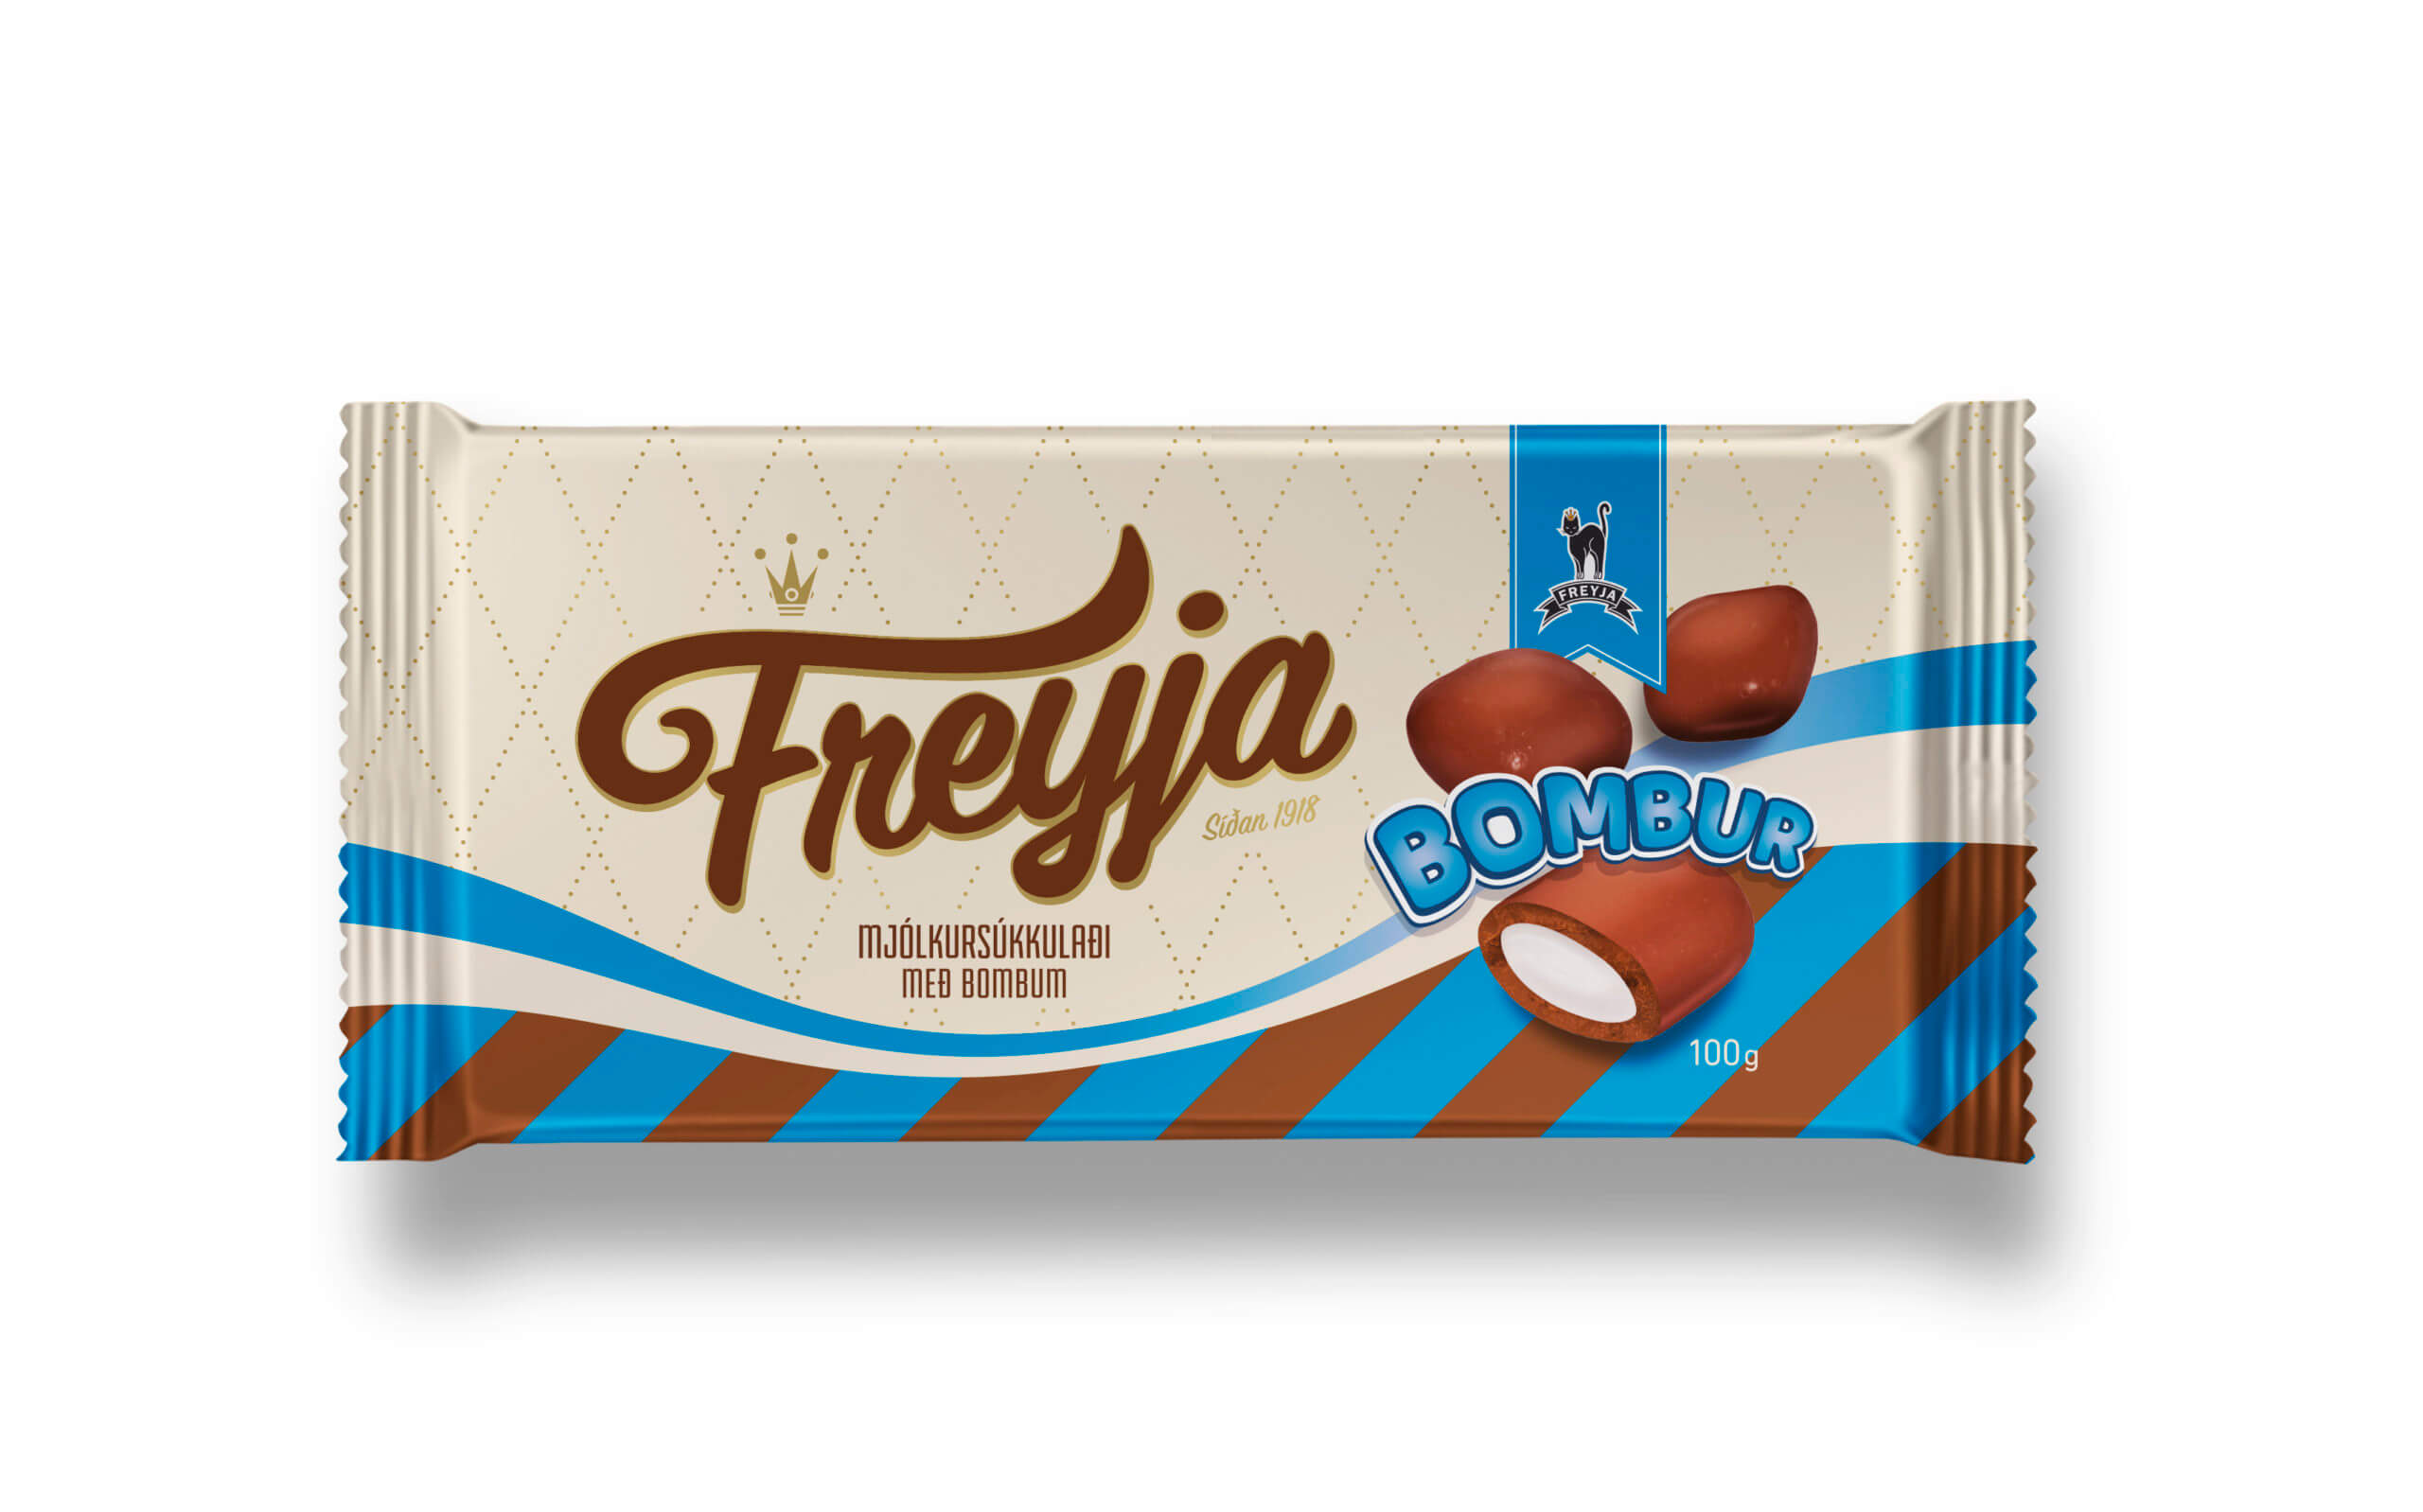 Läs mer om Freyja Bombur Vanilla Chokladkaka 100g